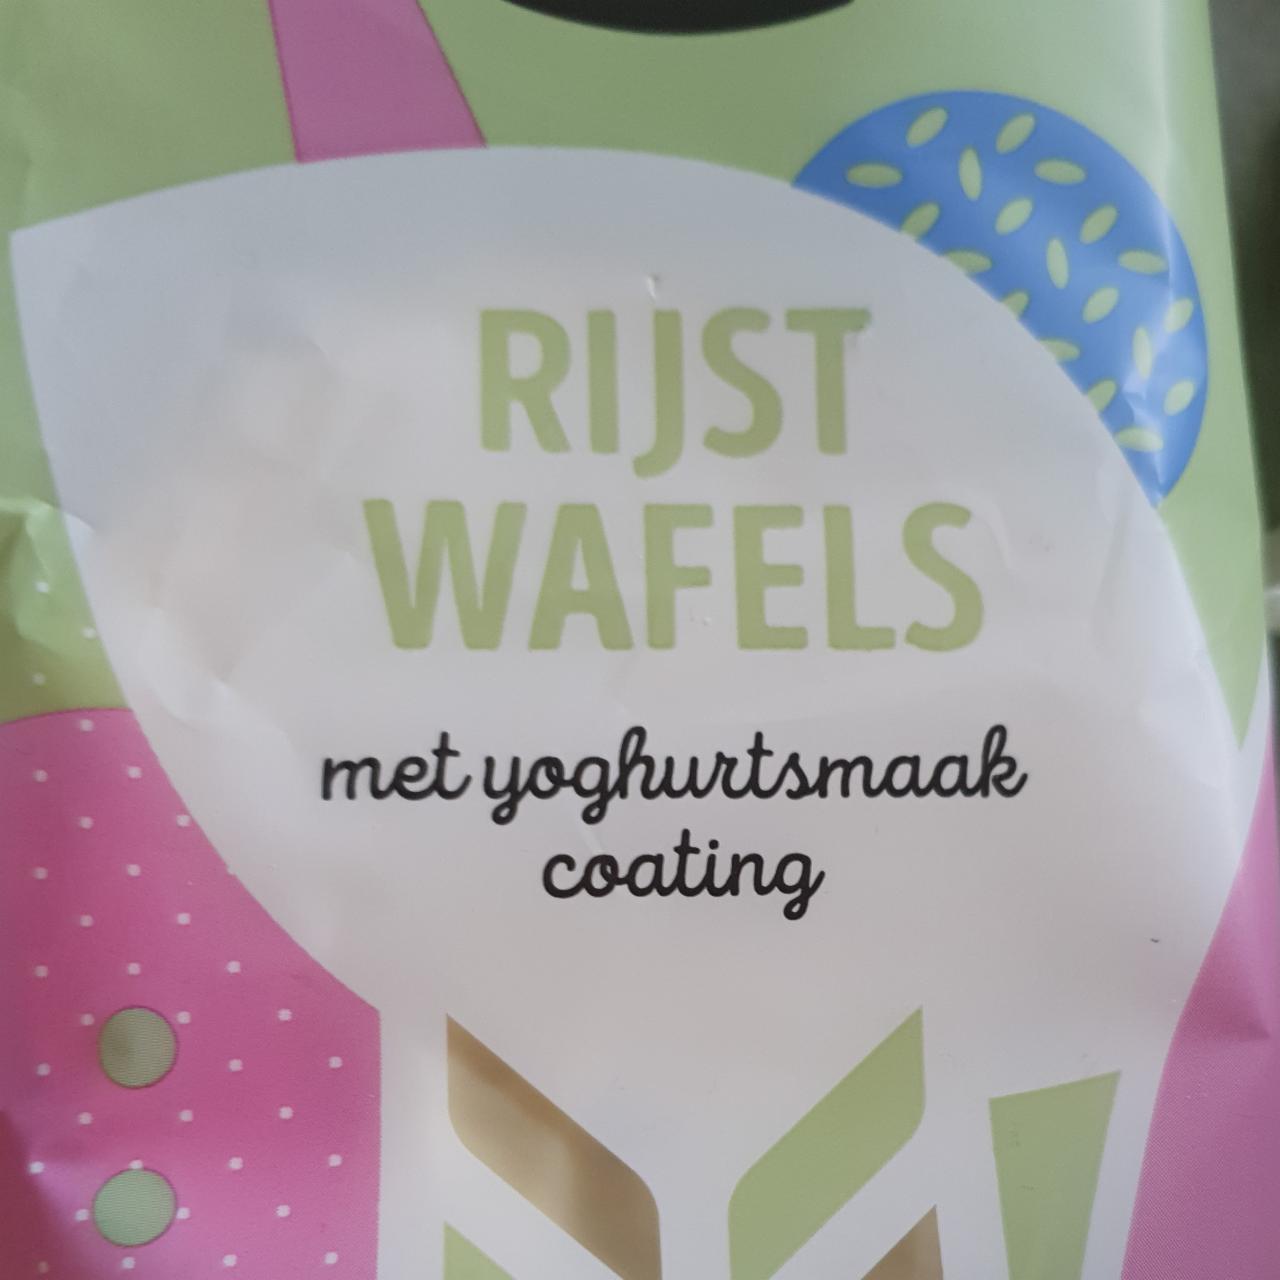 Fotografie - Rijst Wafels met yoghurtsmaak coating Jumbo